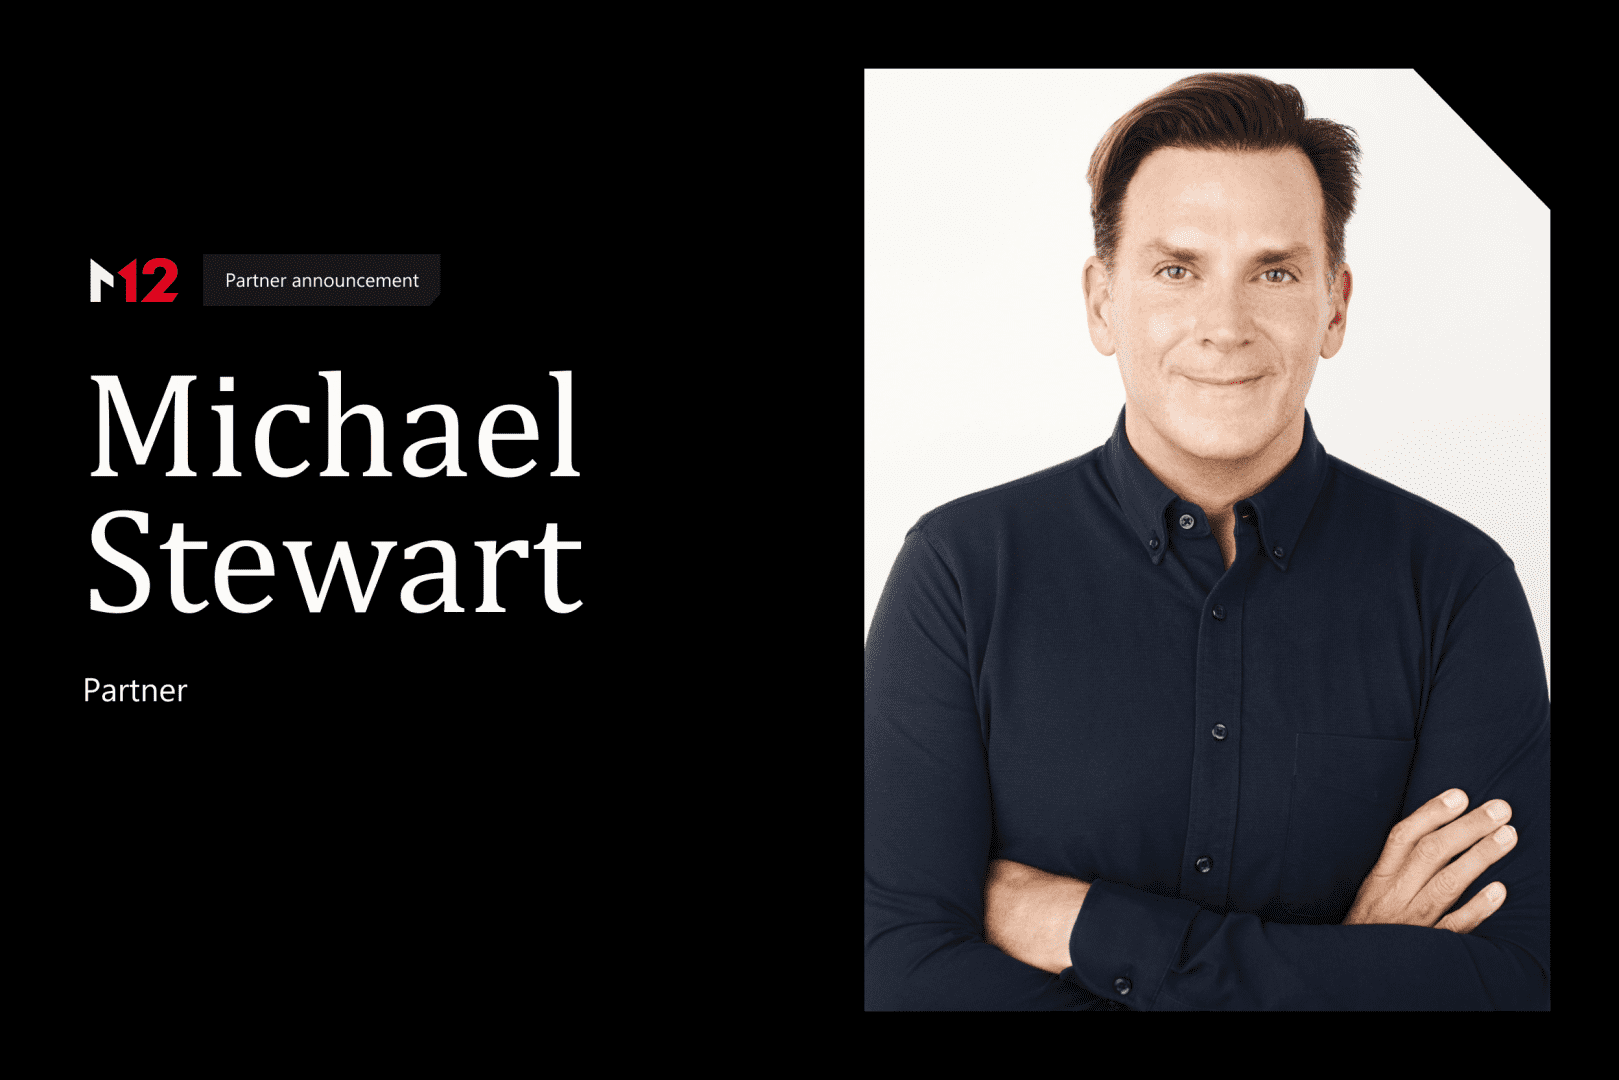 Partner Announcement with headshot of Michael Stewart